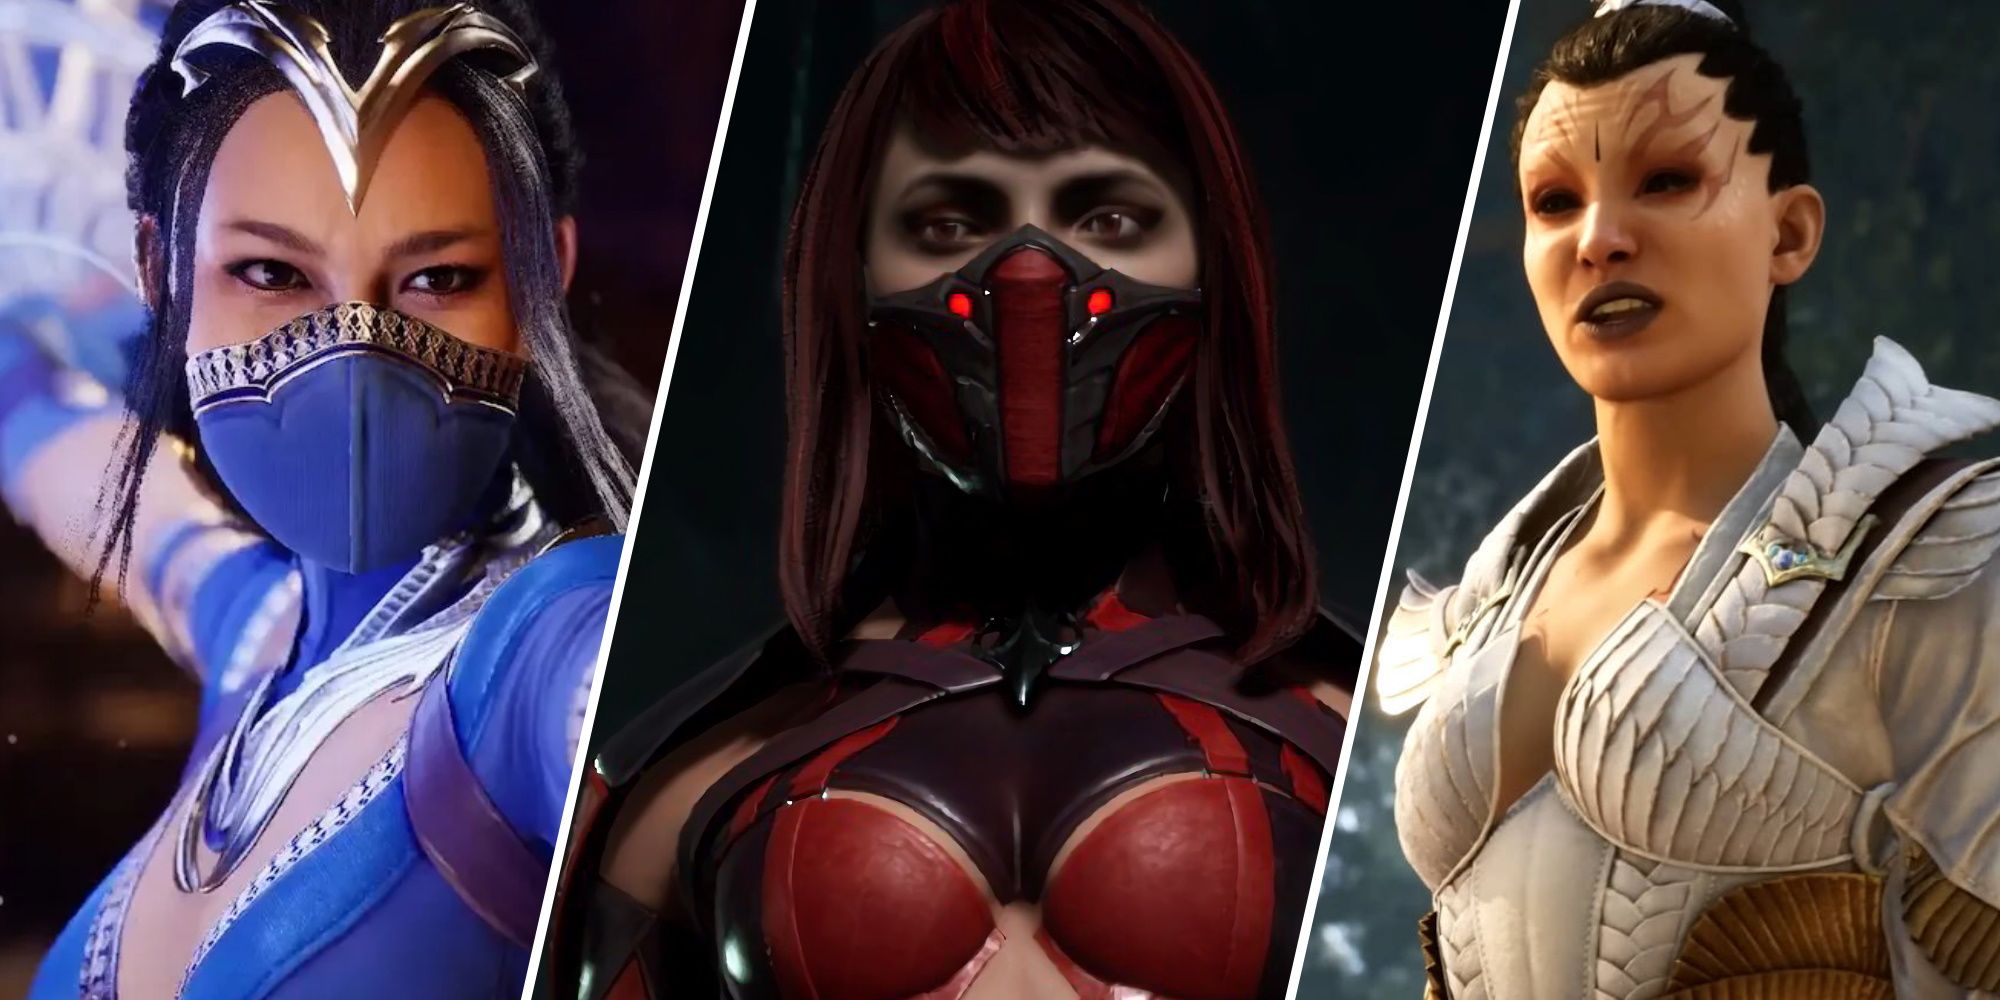 Mortal Kombat, Split image featuring a close up shot of Kitana, Skarlet, and Ashrah